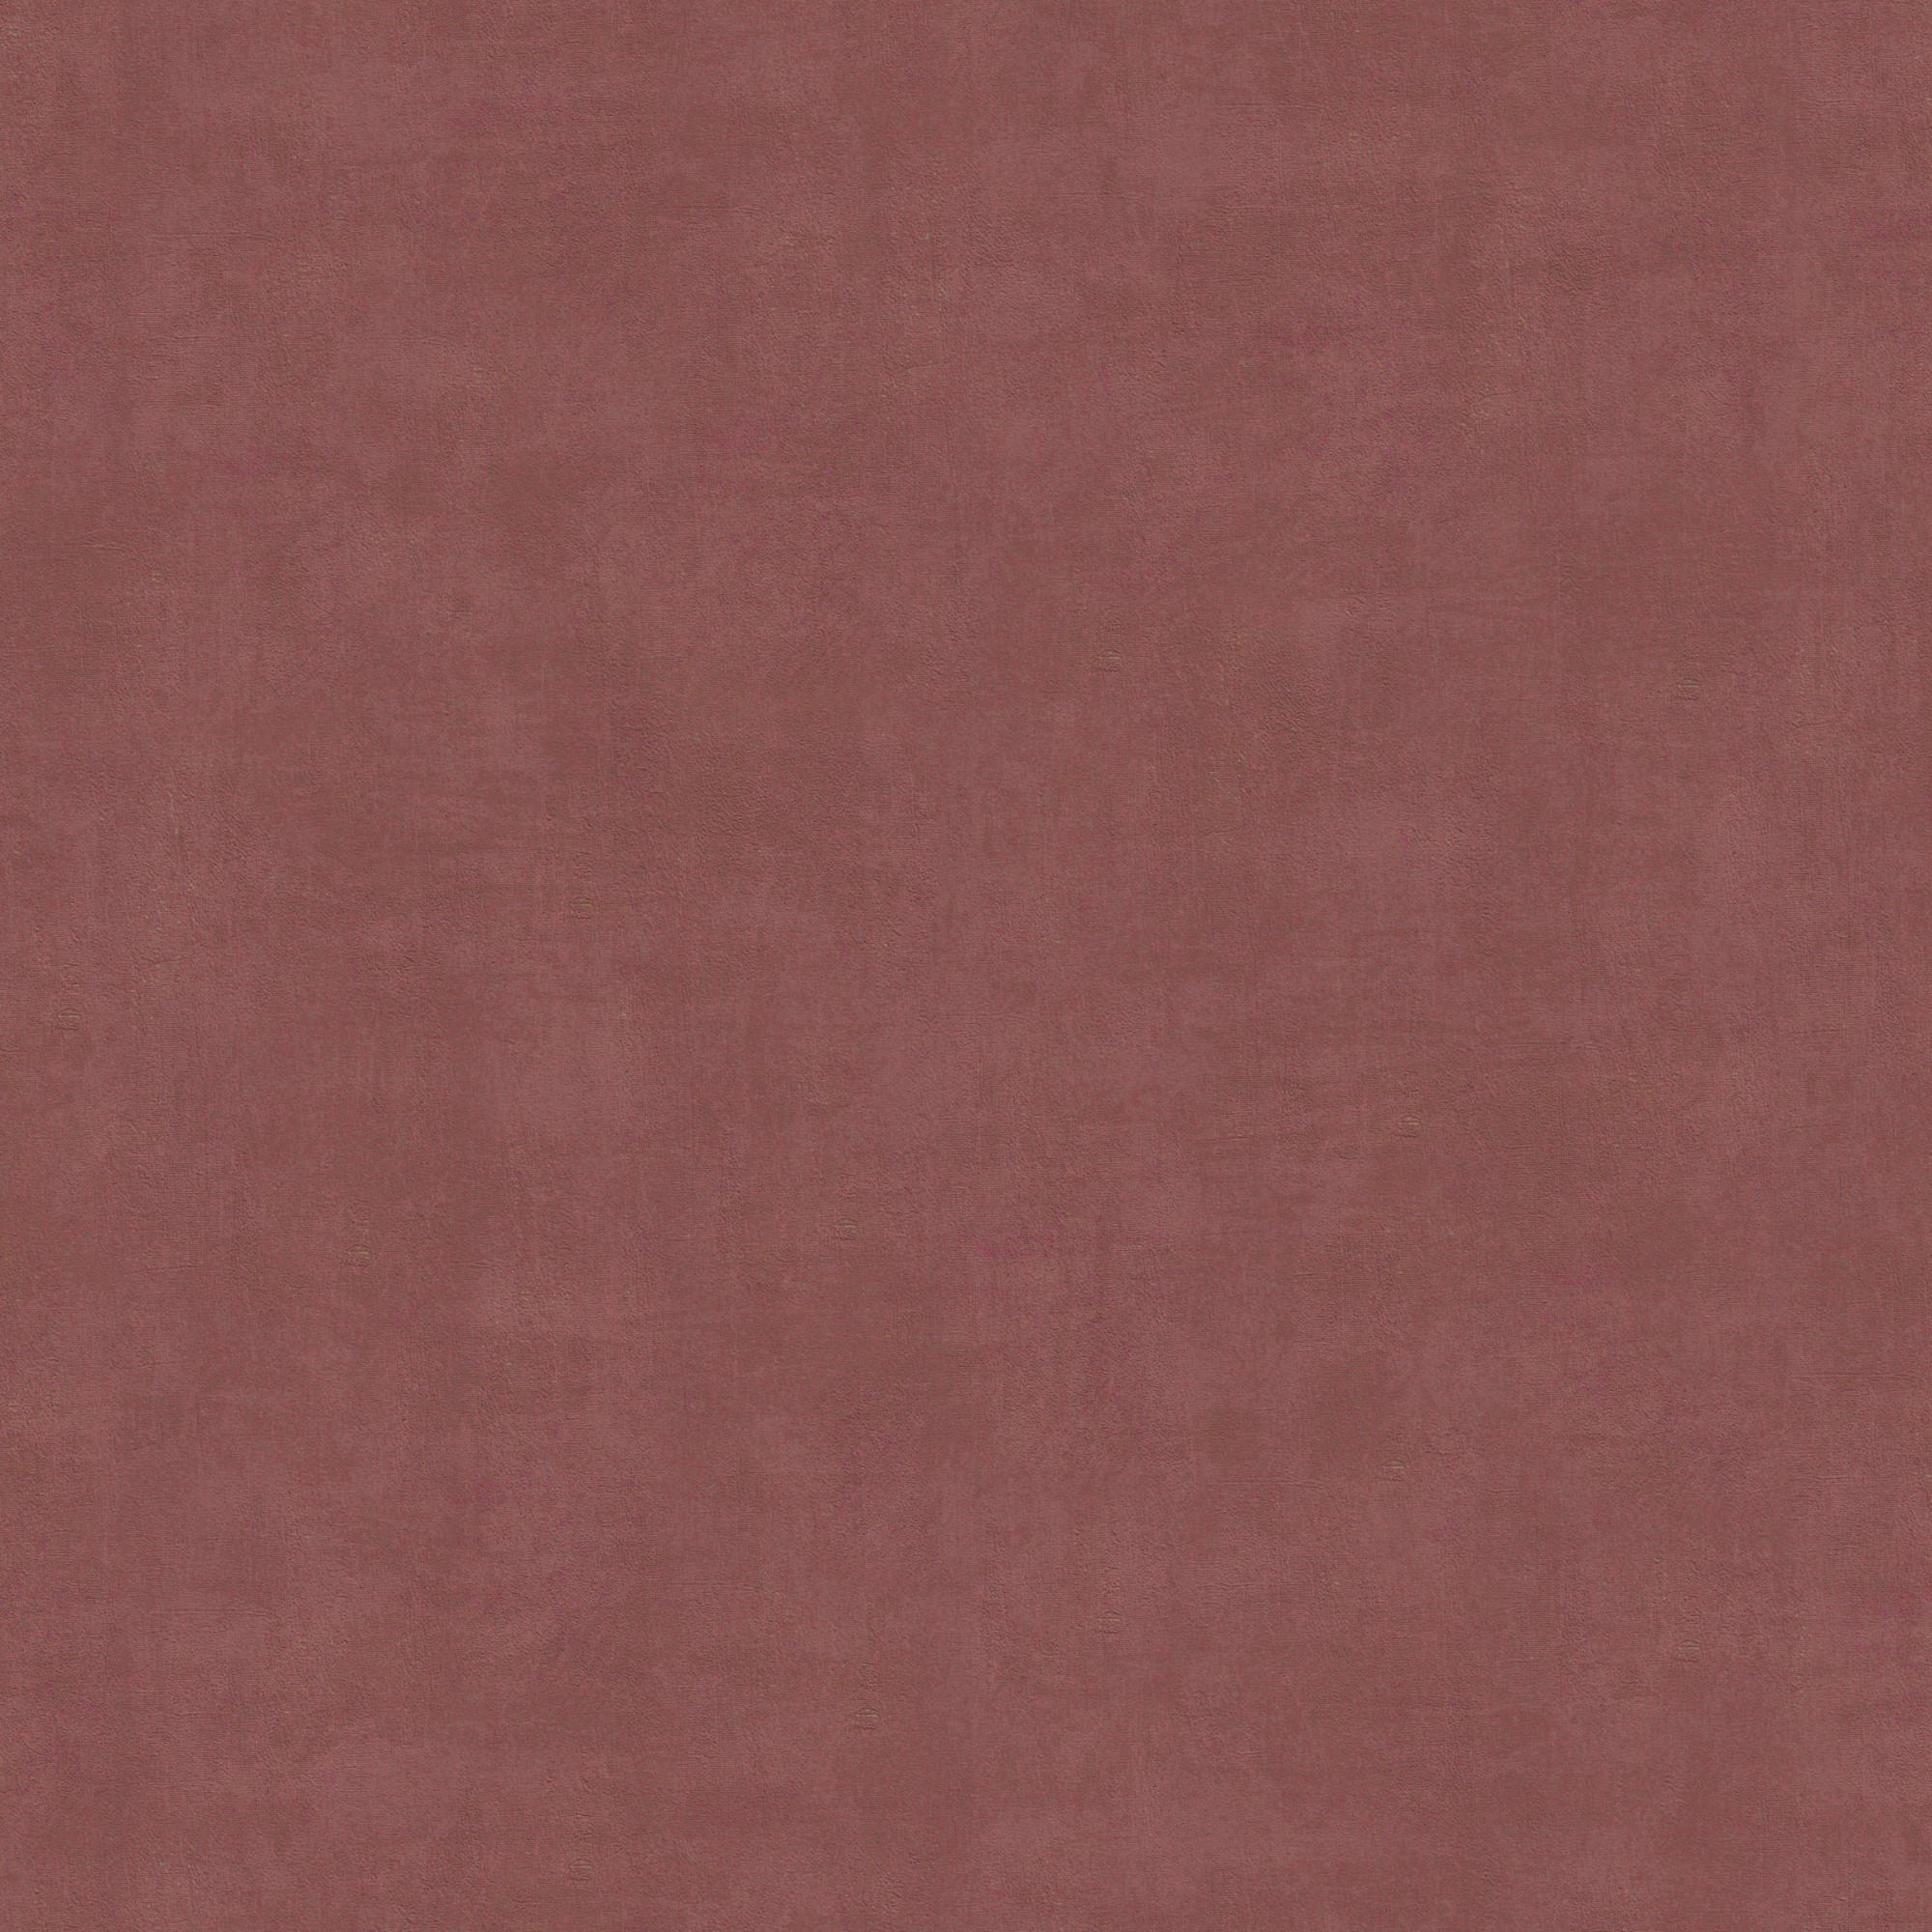 VLIESTAPETE  - Rot, Basics, Papier/Kunststoff (52/1000cm)